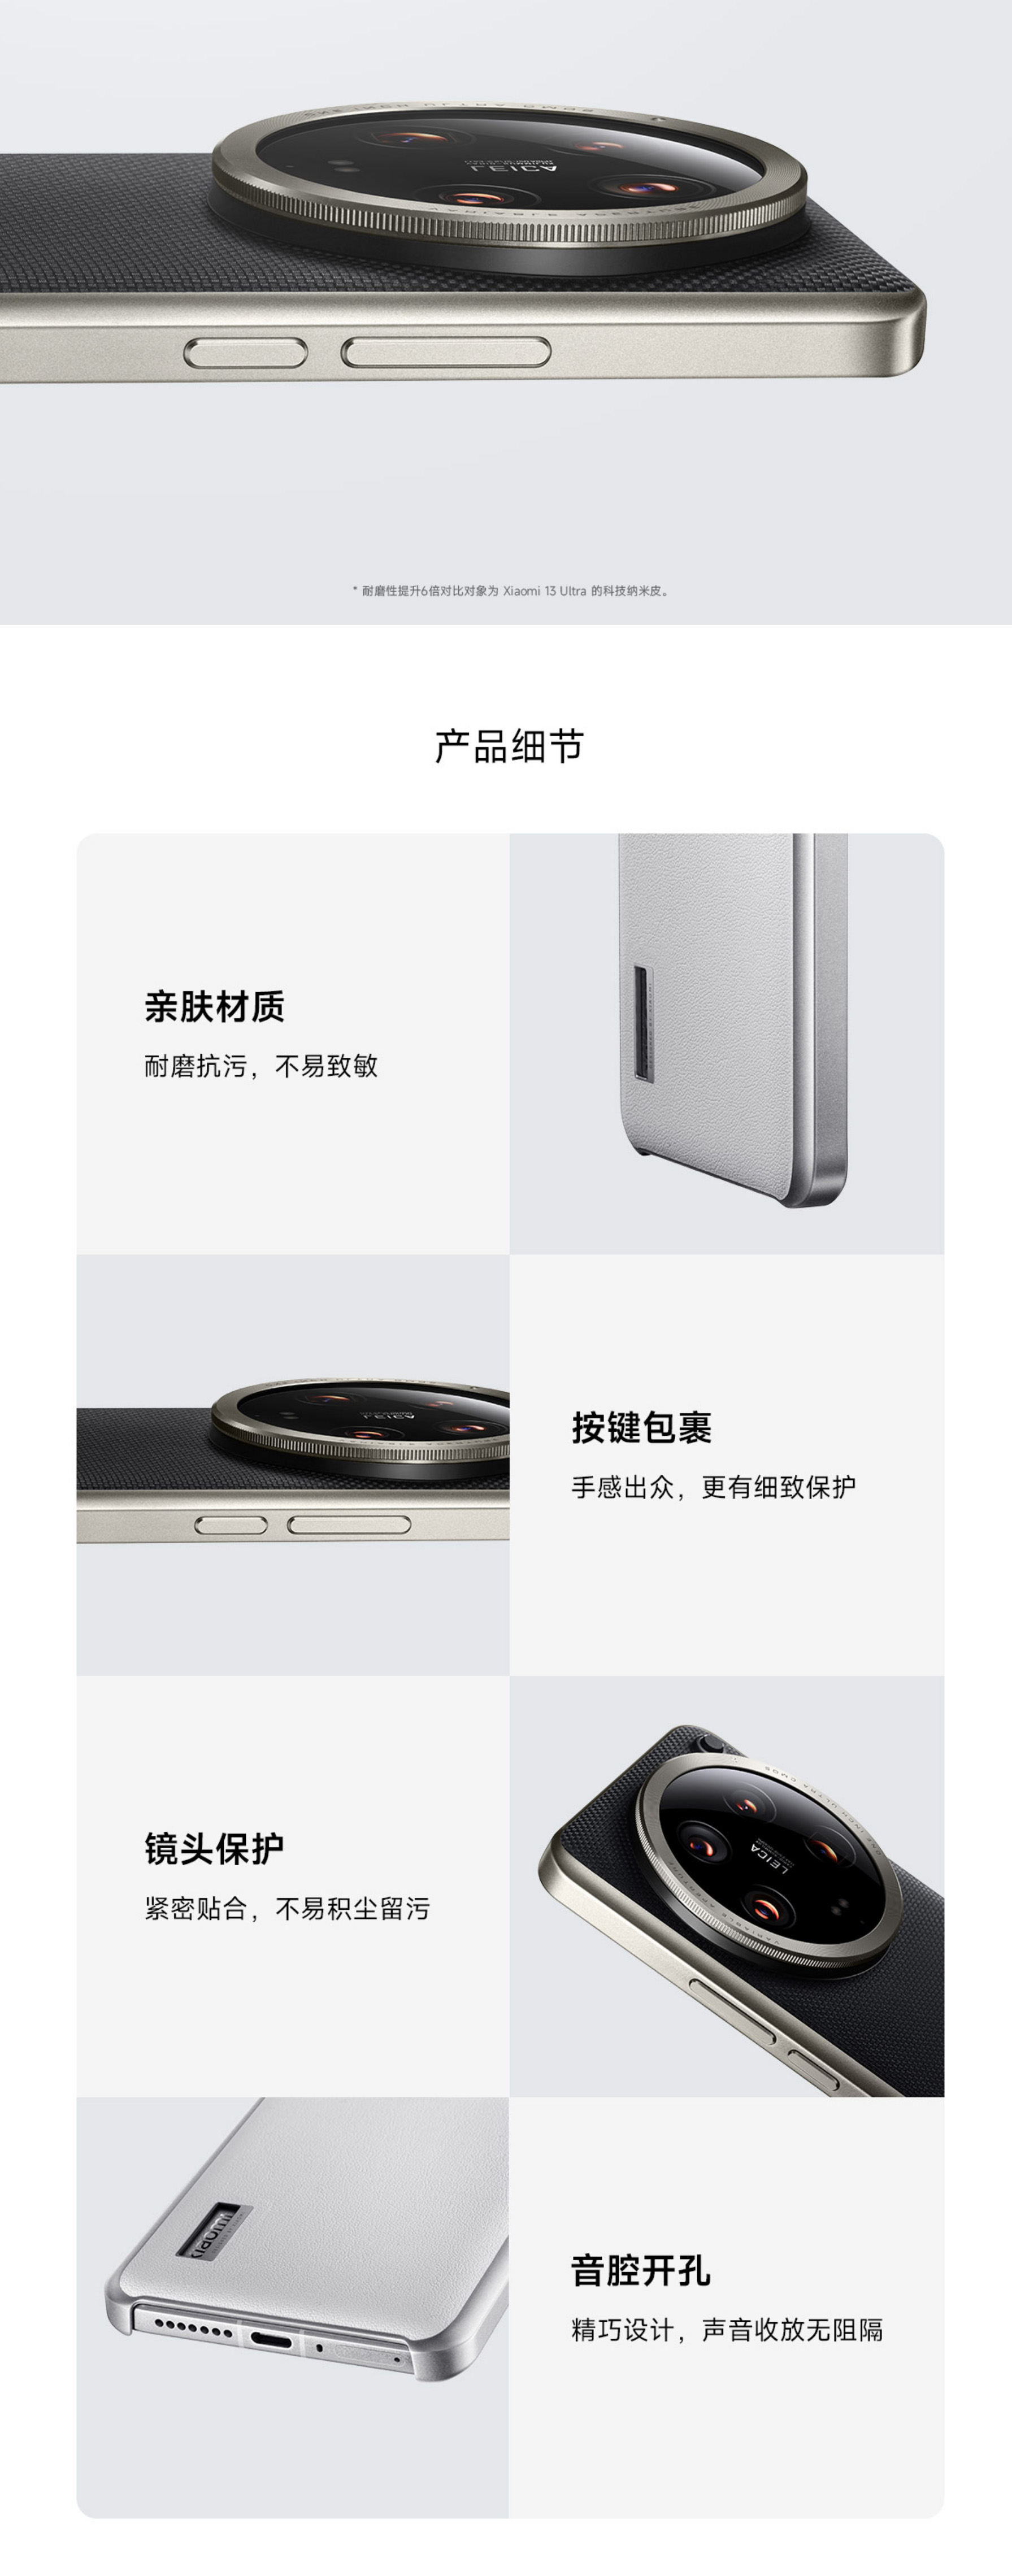 Xiaomi 14 Ultra Nano Tech Leather Case